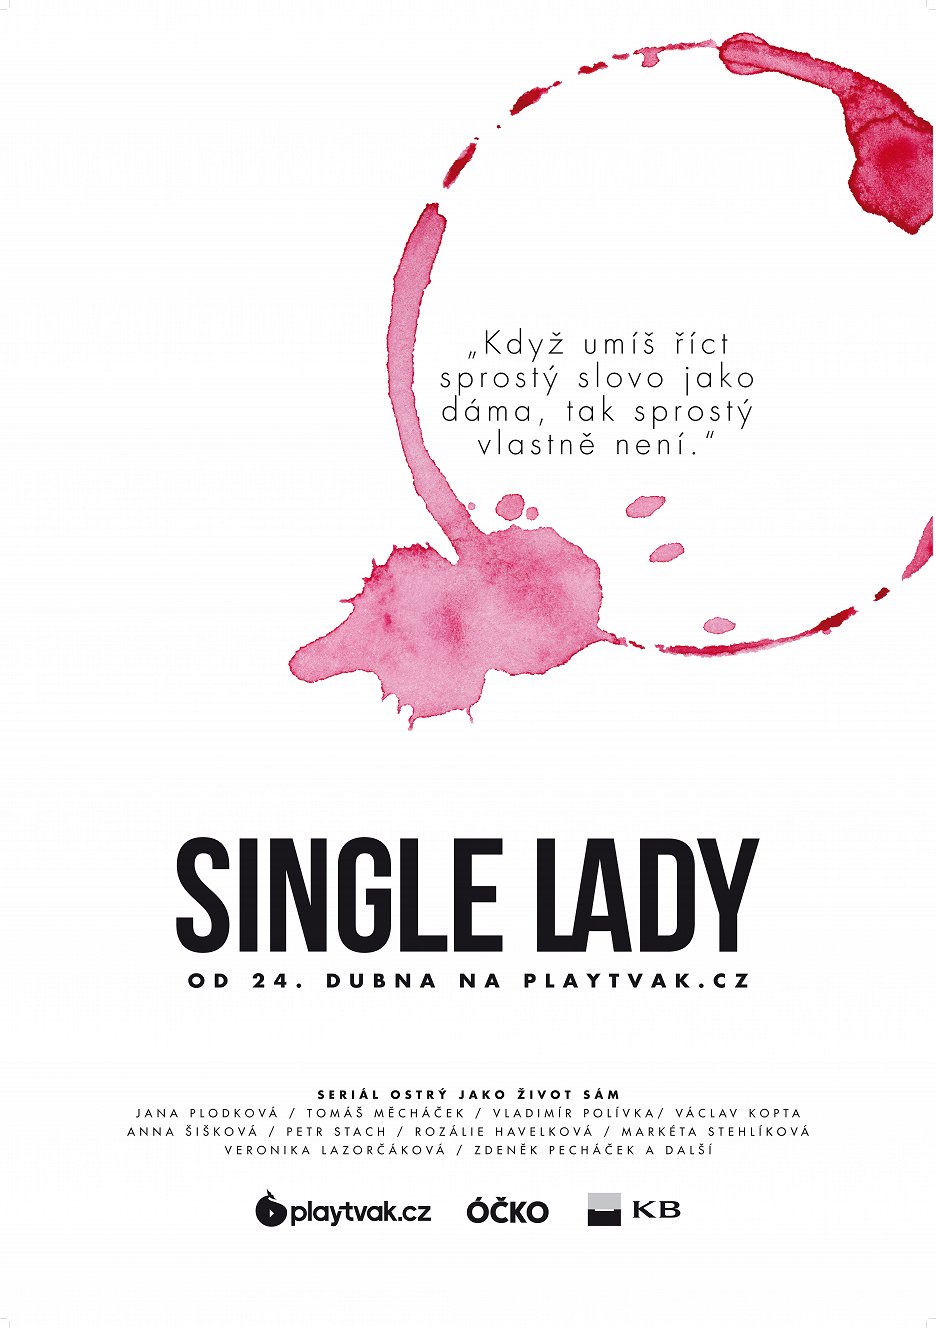 single lady playtvak.cz